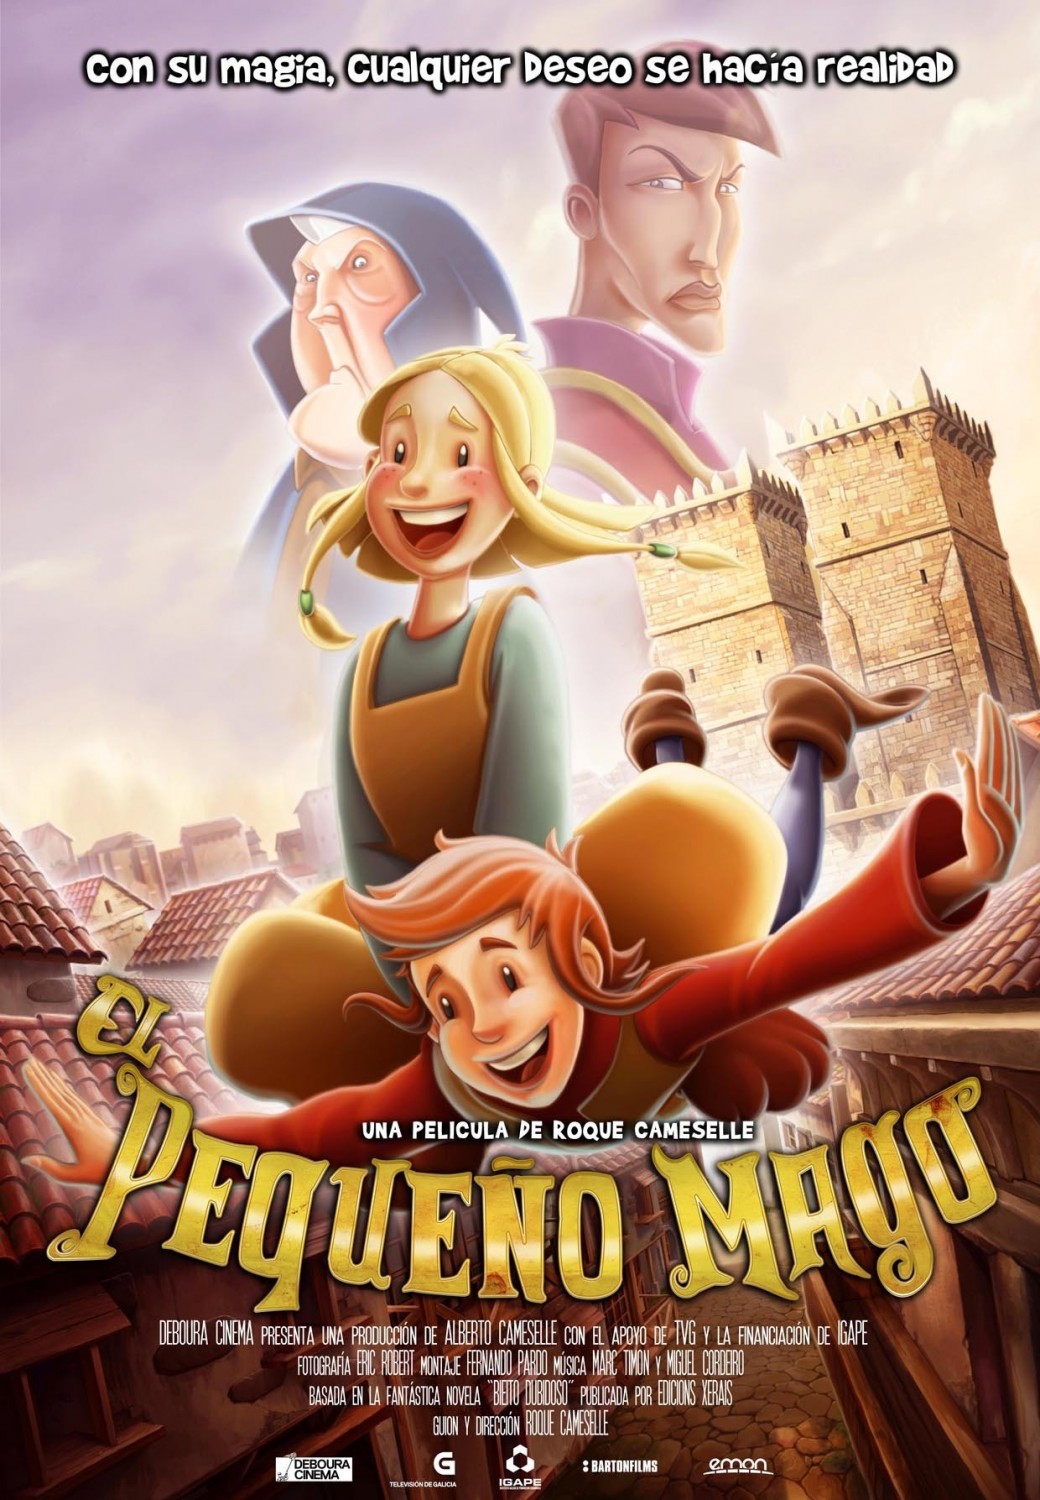 Extra Large Movie Poster Image for El pequeño mago 